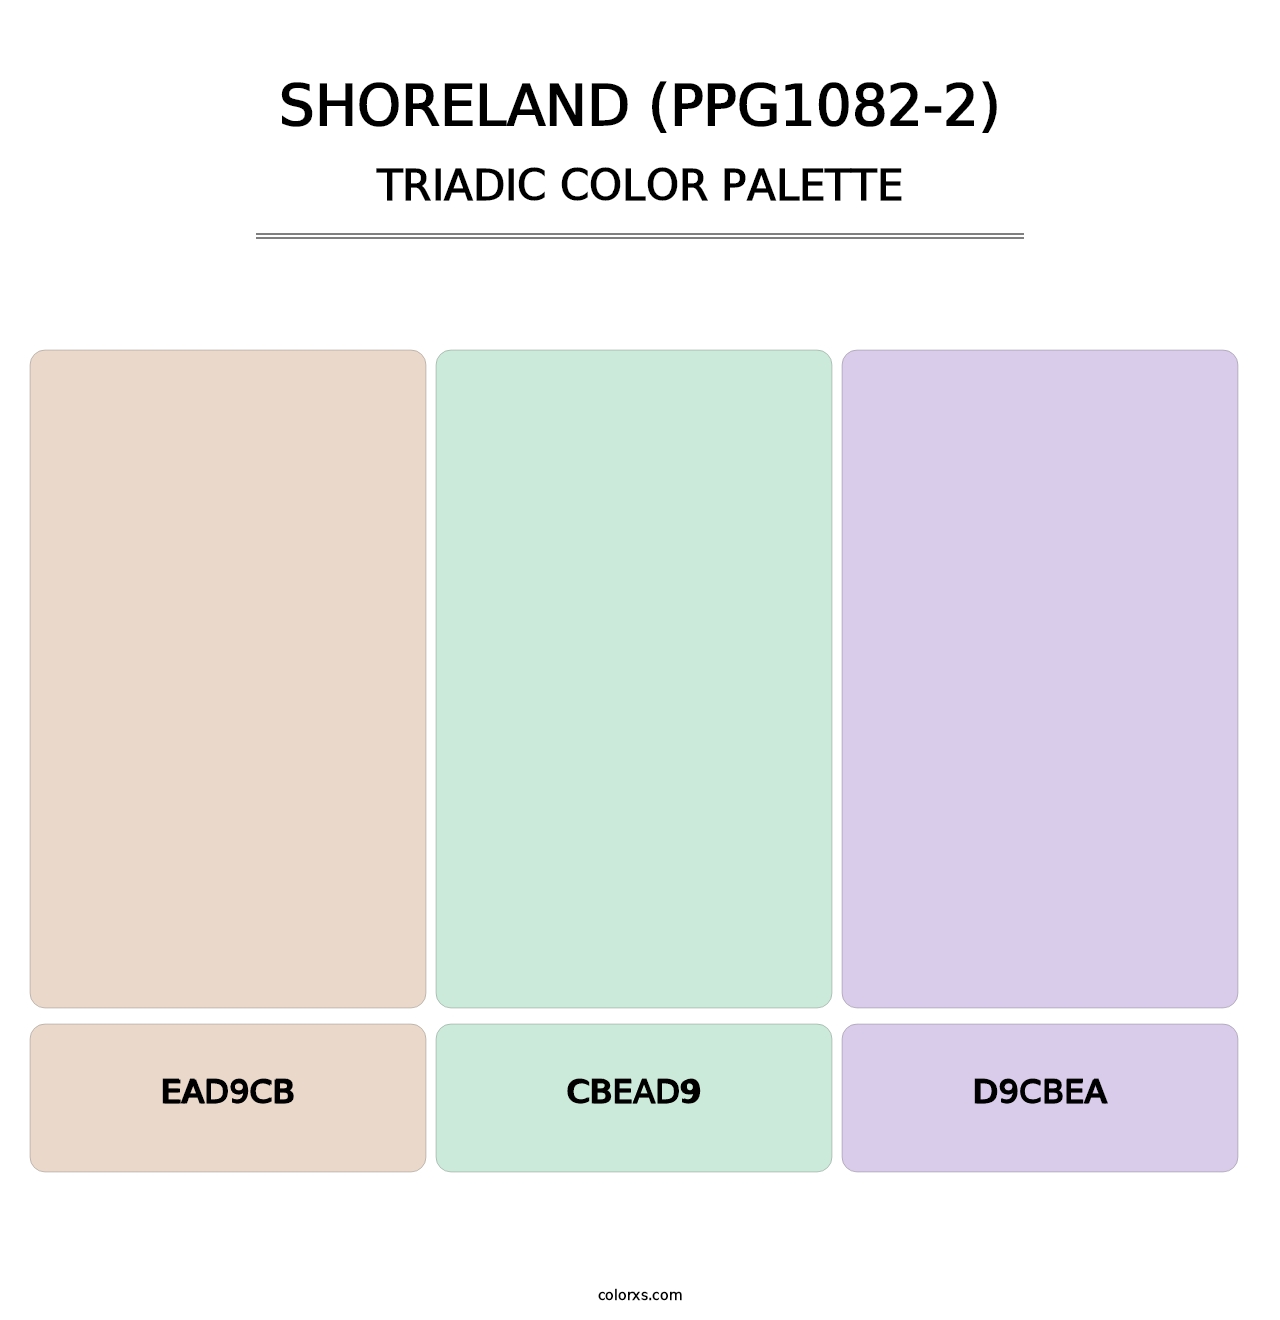 Shoreland (PPG1082-2) - Triadic Color Palette